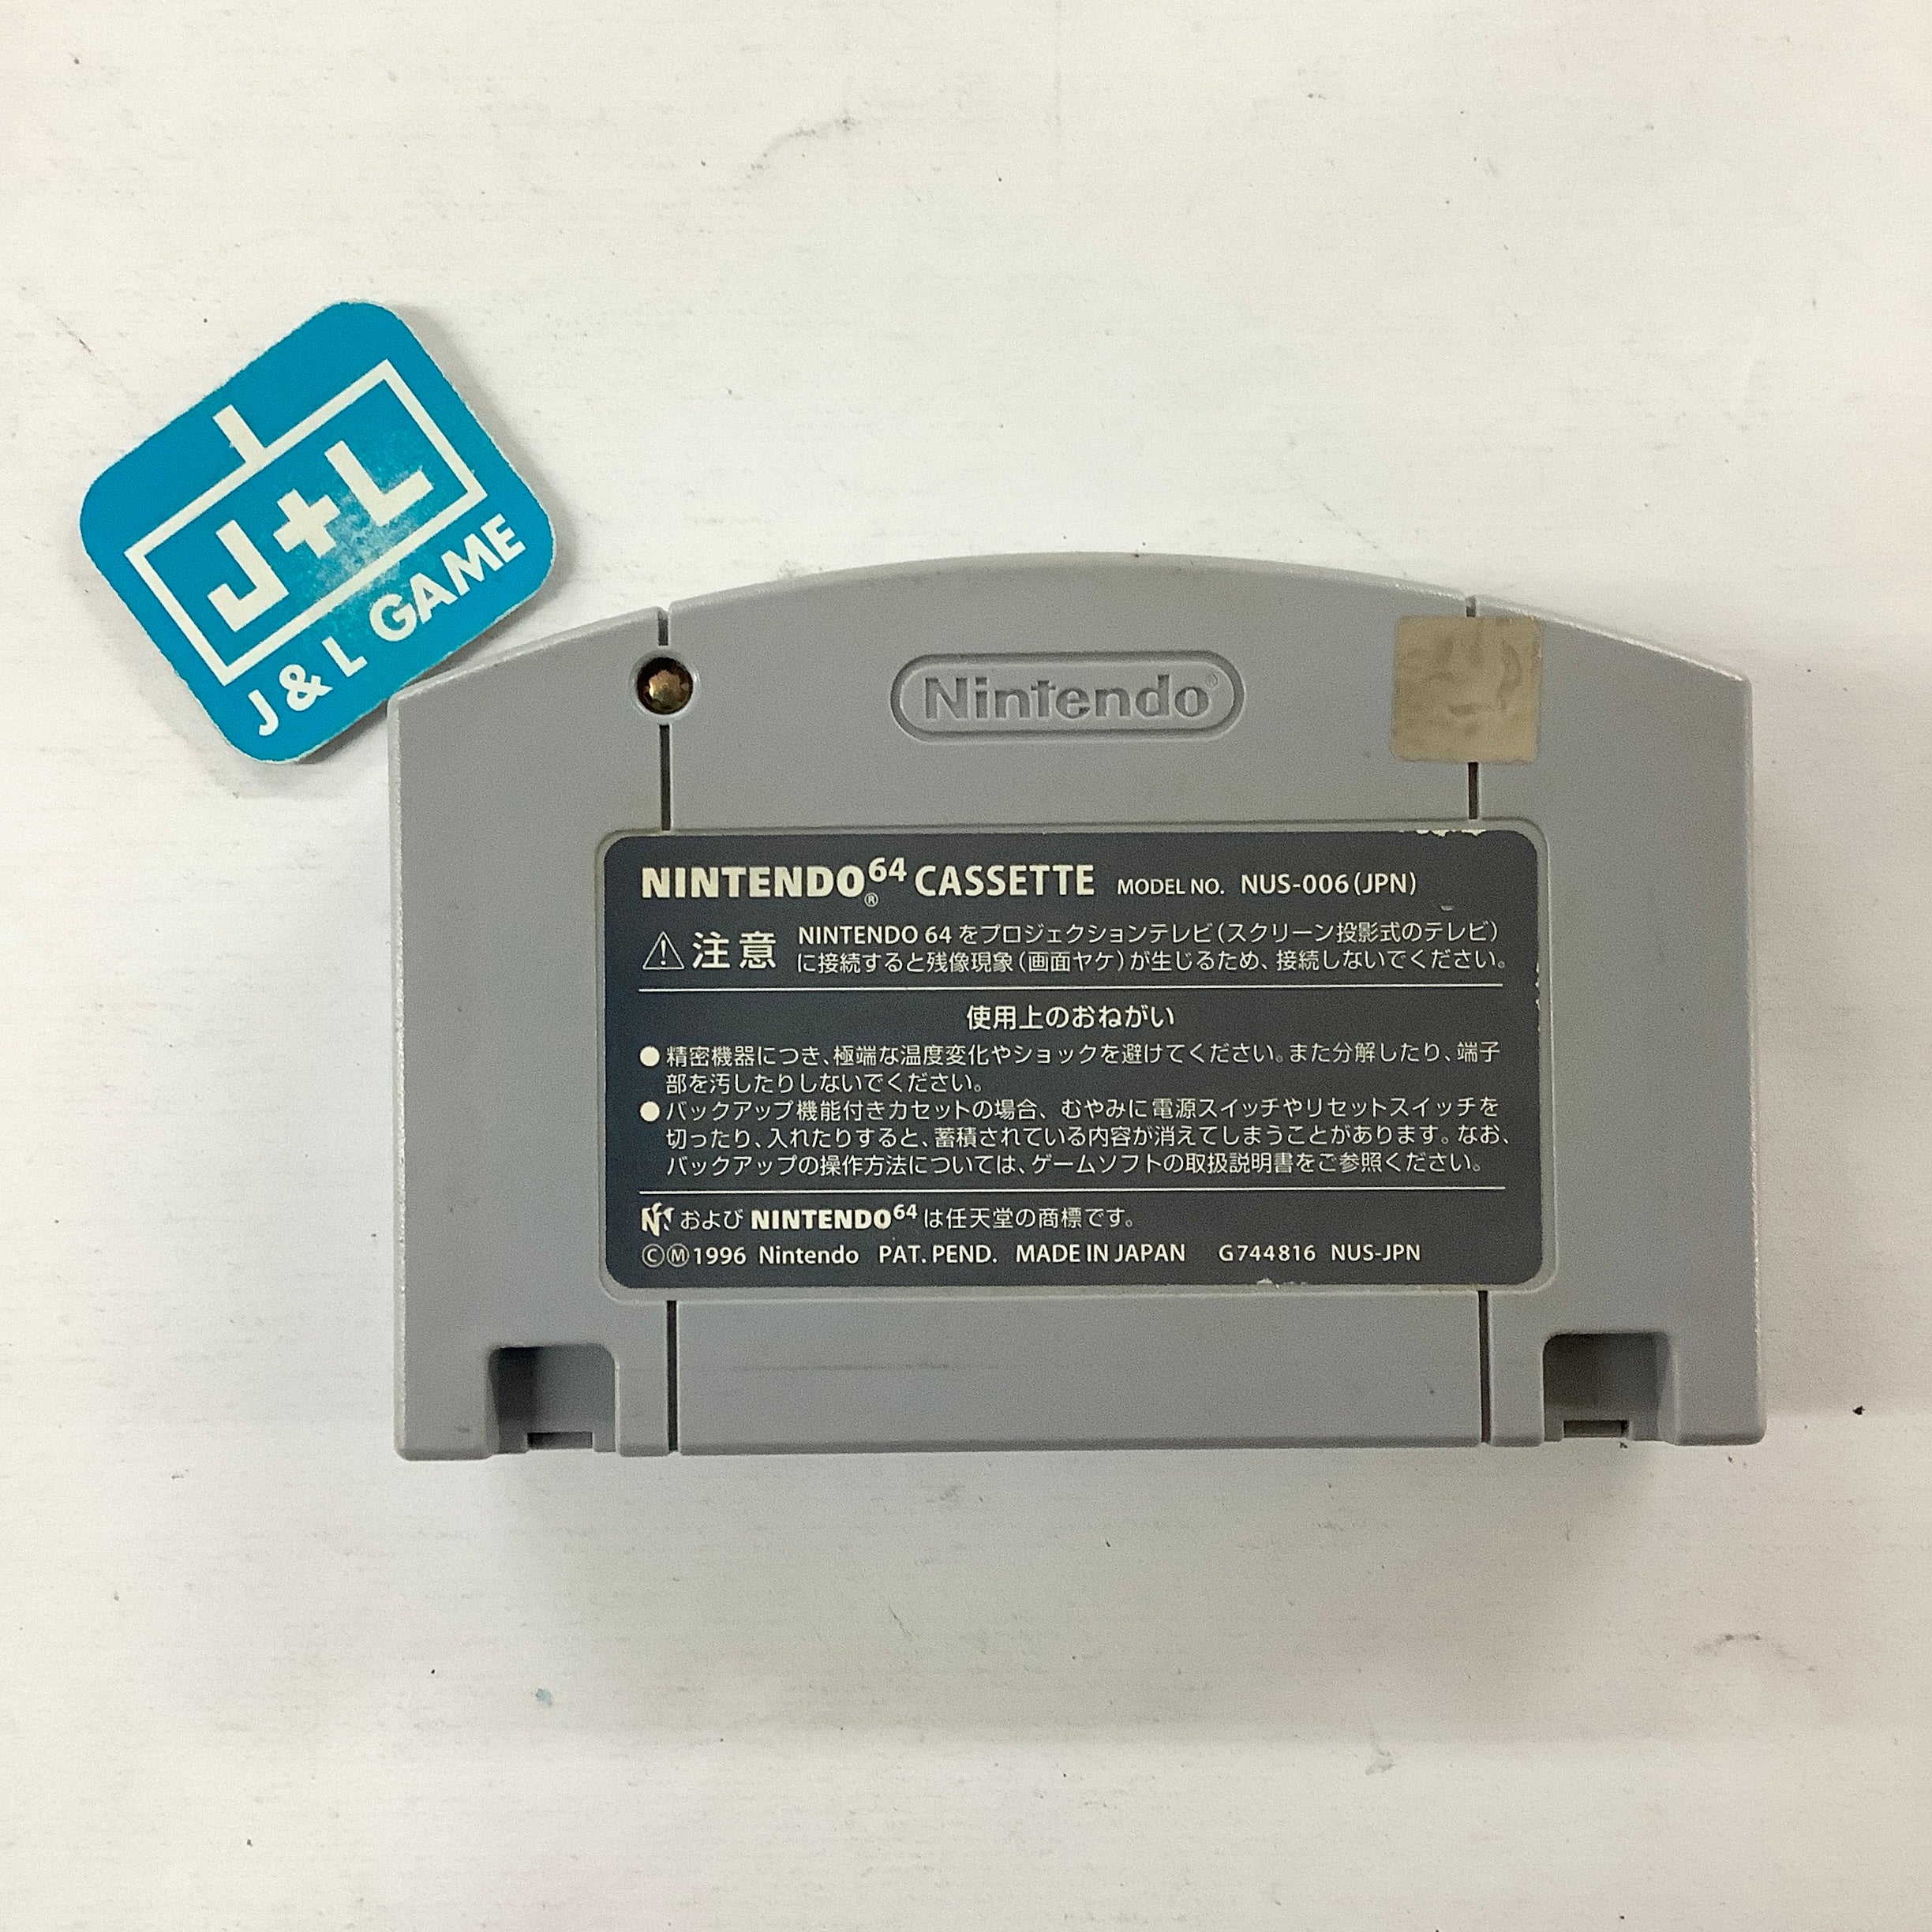 Wave Race 64: Kawasaki Jet Ski - (N64) Nintendo 64 [Pre-Owned] (Japanese Import) Video Games Nintendo   